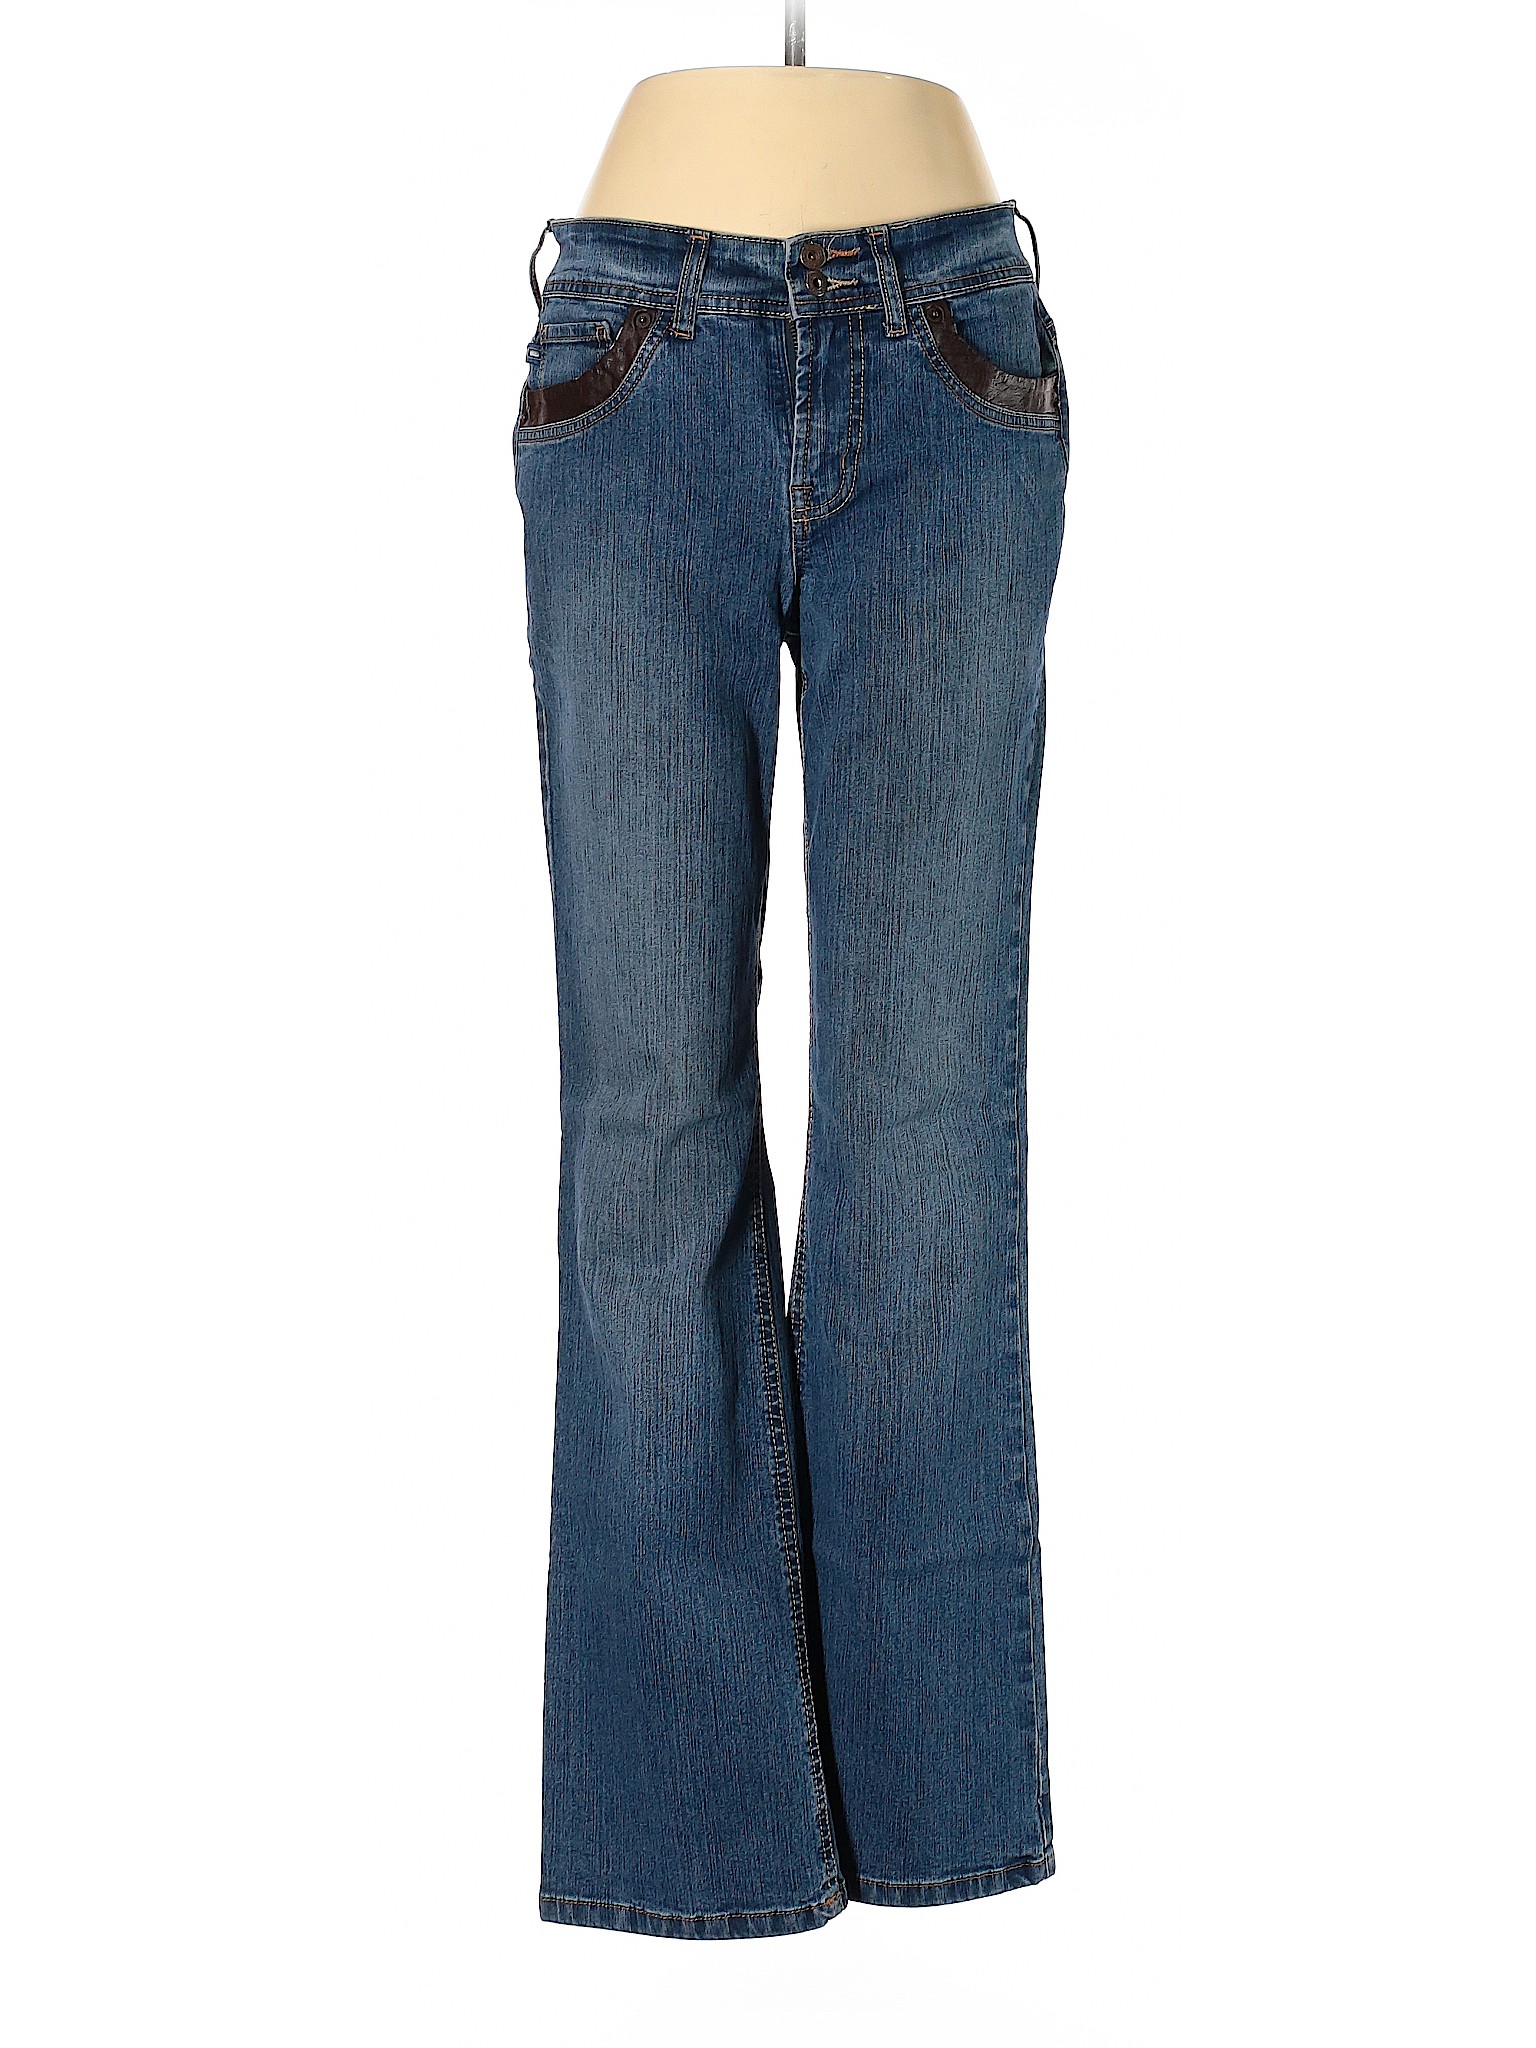 Bandolino Women Blue Jeans 6 | eBay